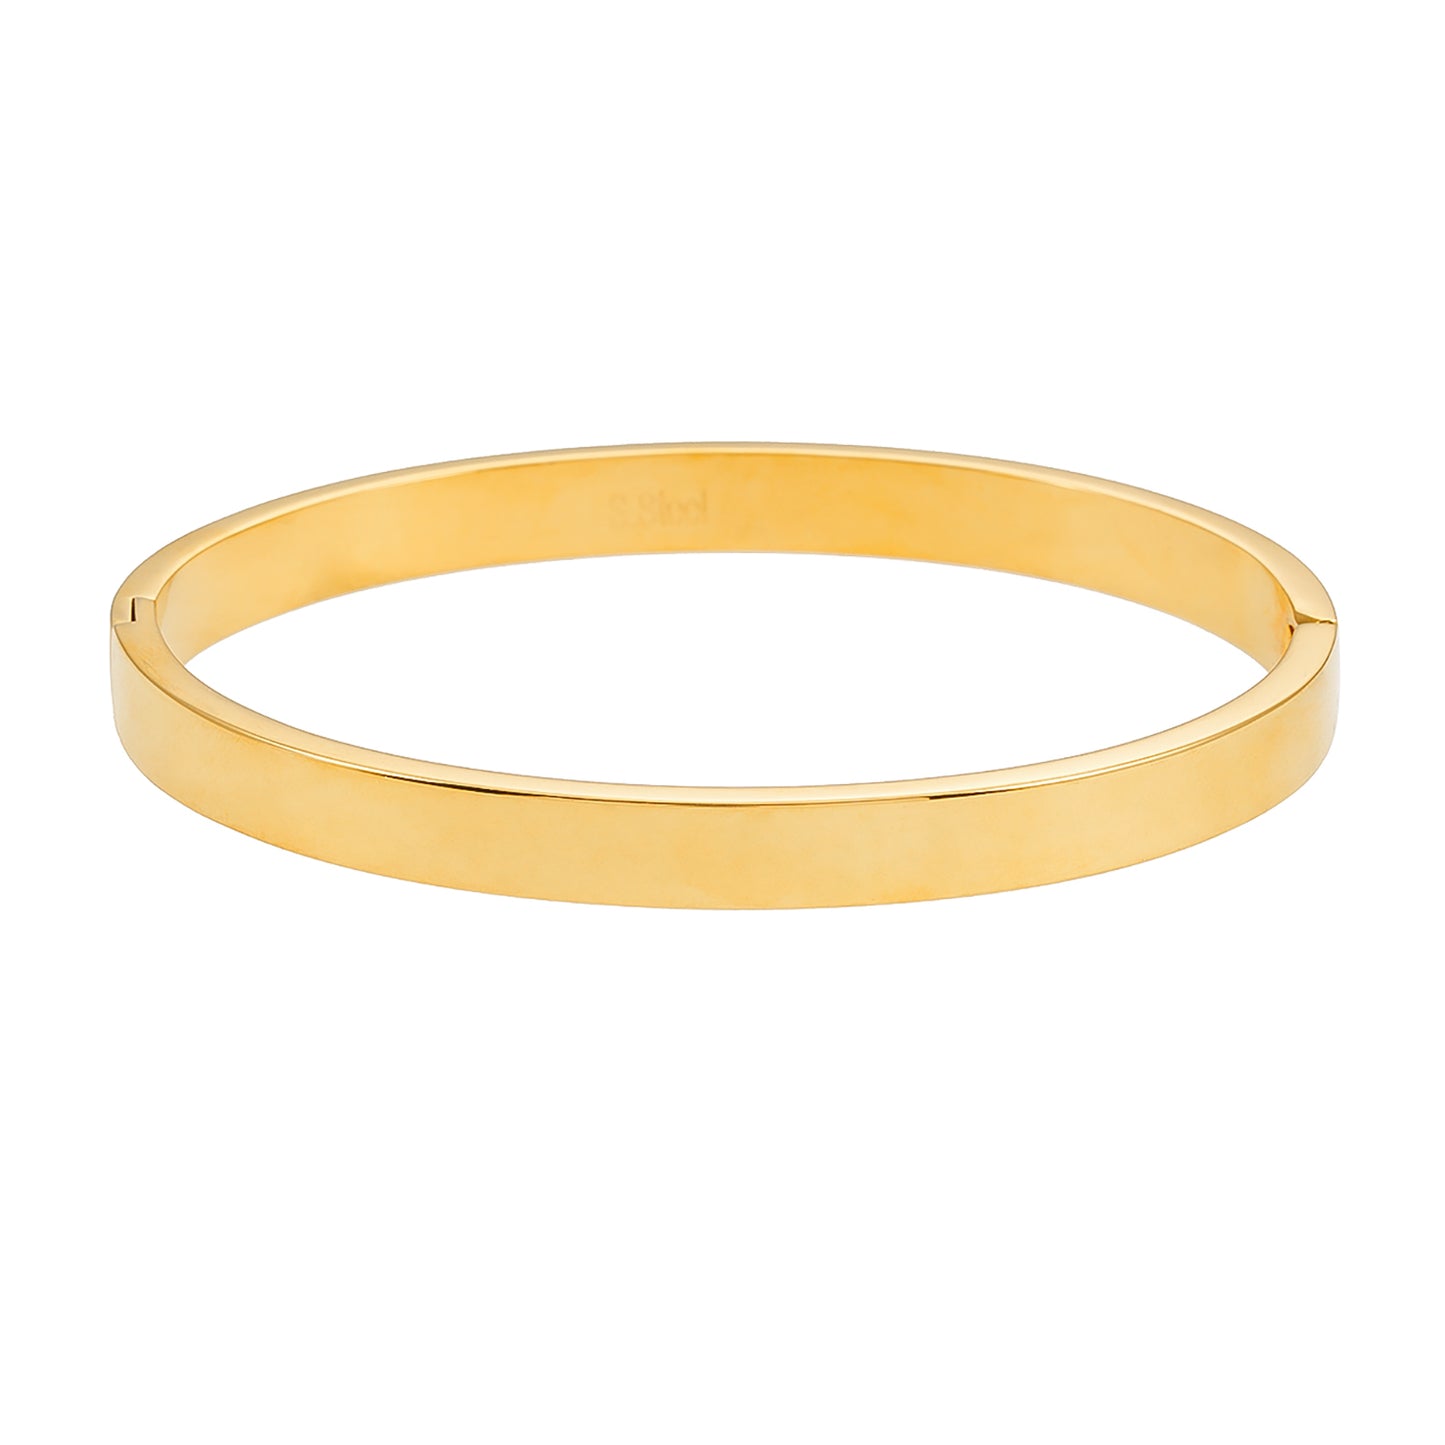 Style ATTILI: Minimalist Classic Gold Band Bracelet